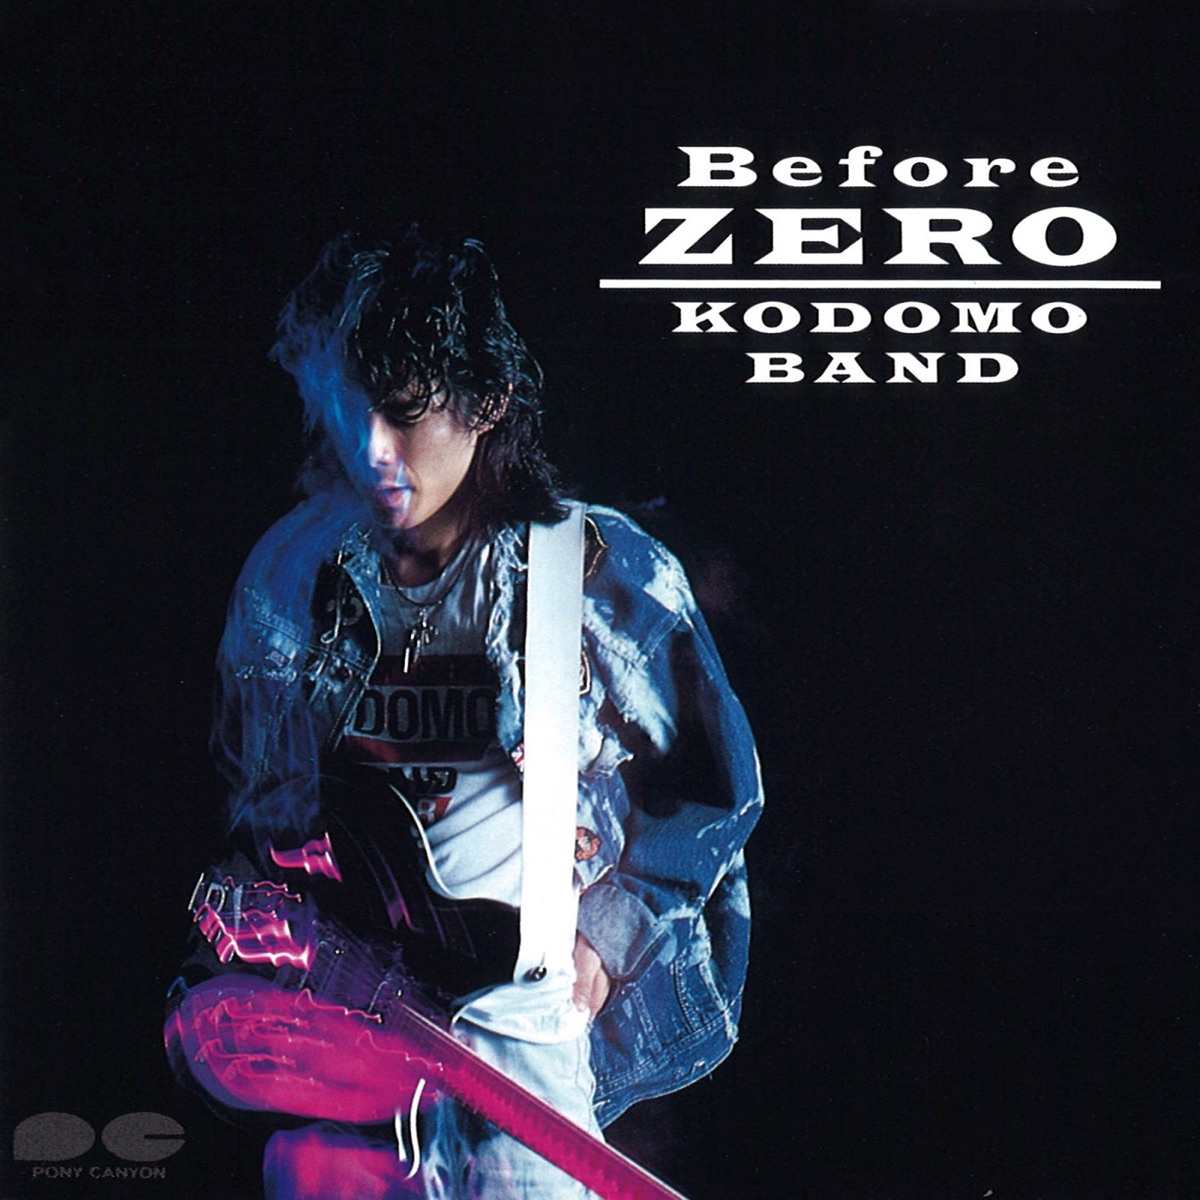 Before Zero - Album by KODOMO BAND - Apple Music